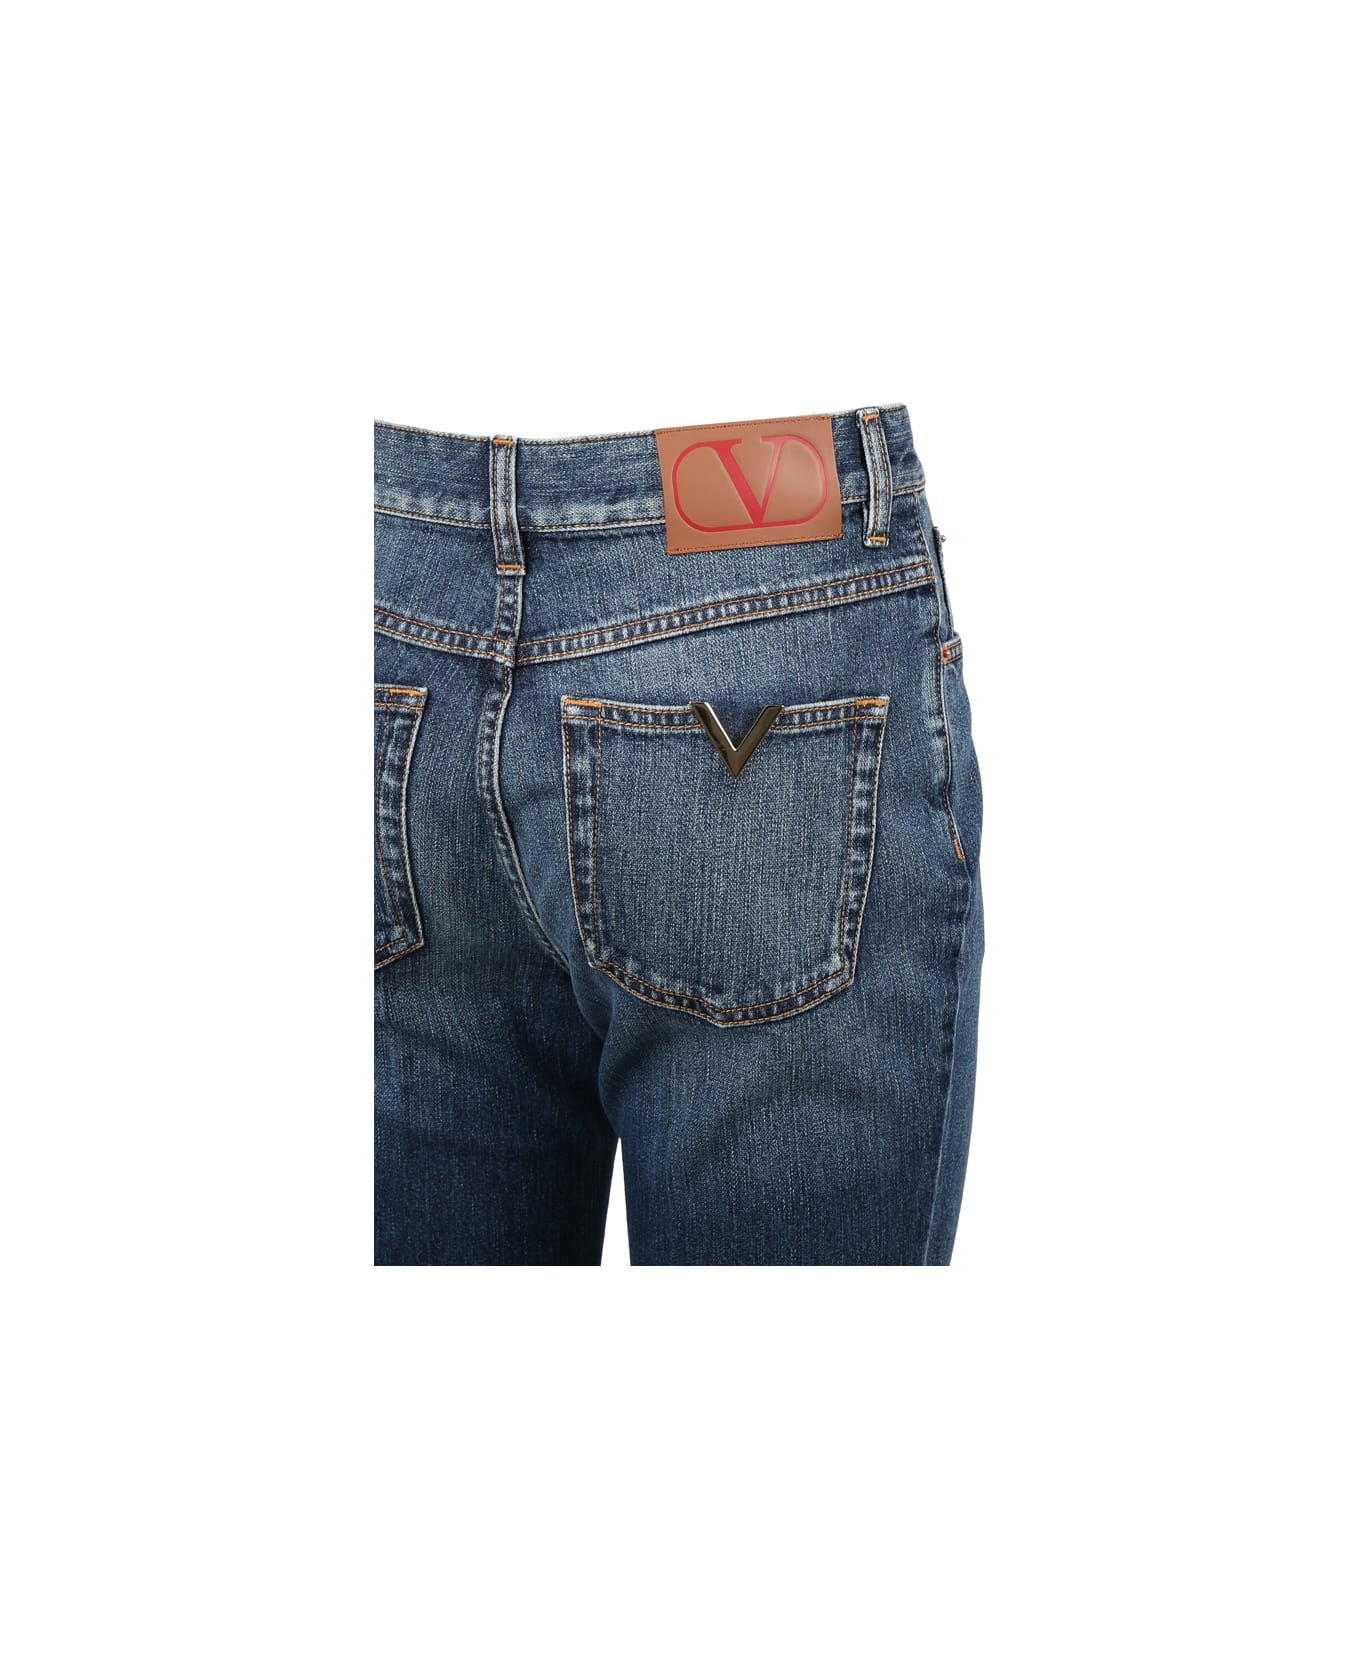 Valentino Bootcut Jeans In Cotton Denim - Medium blue denim